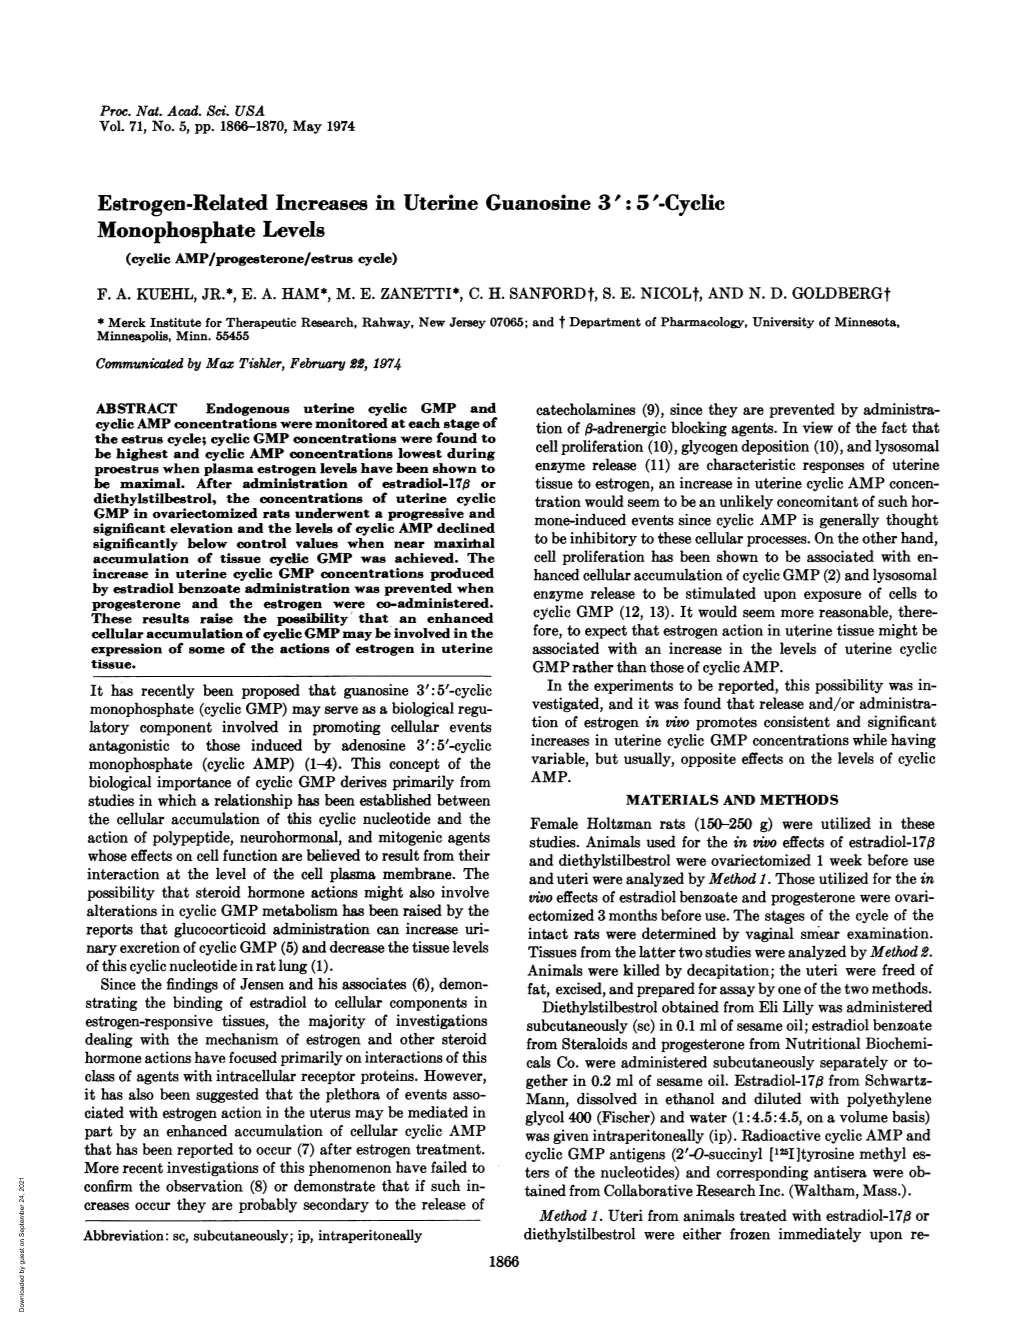 Estrogen-Related Increases in Uterine Guanosine 3': 5 '-Cyclic Monophosphate Levels (Cyclic AMP/Progesterone/Estrus Cycle) F